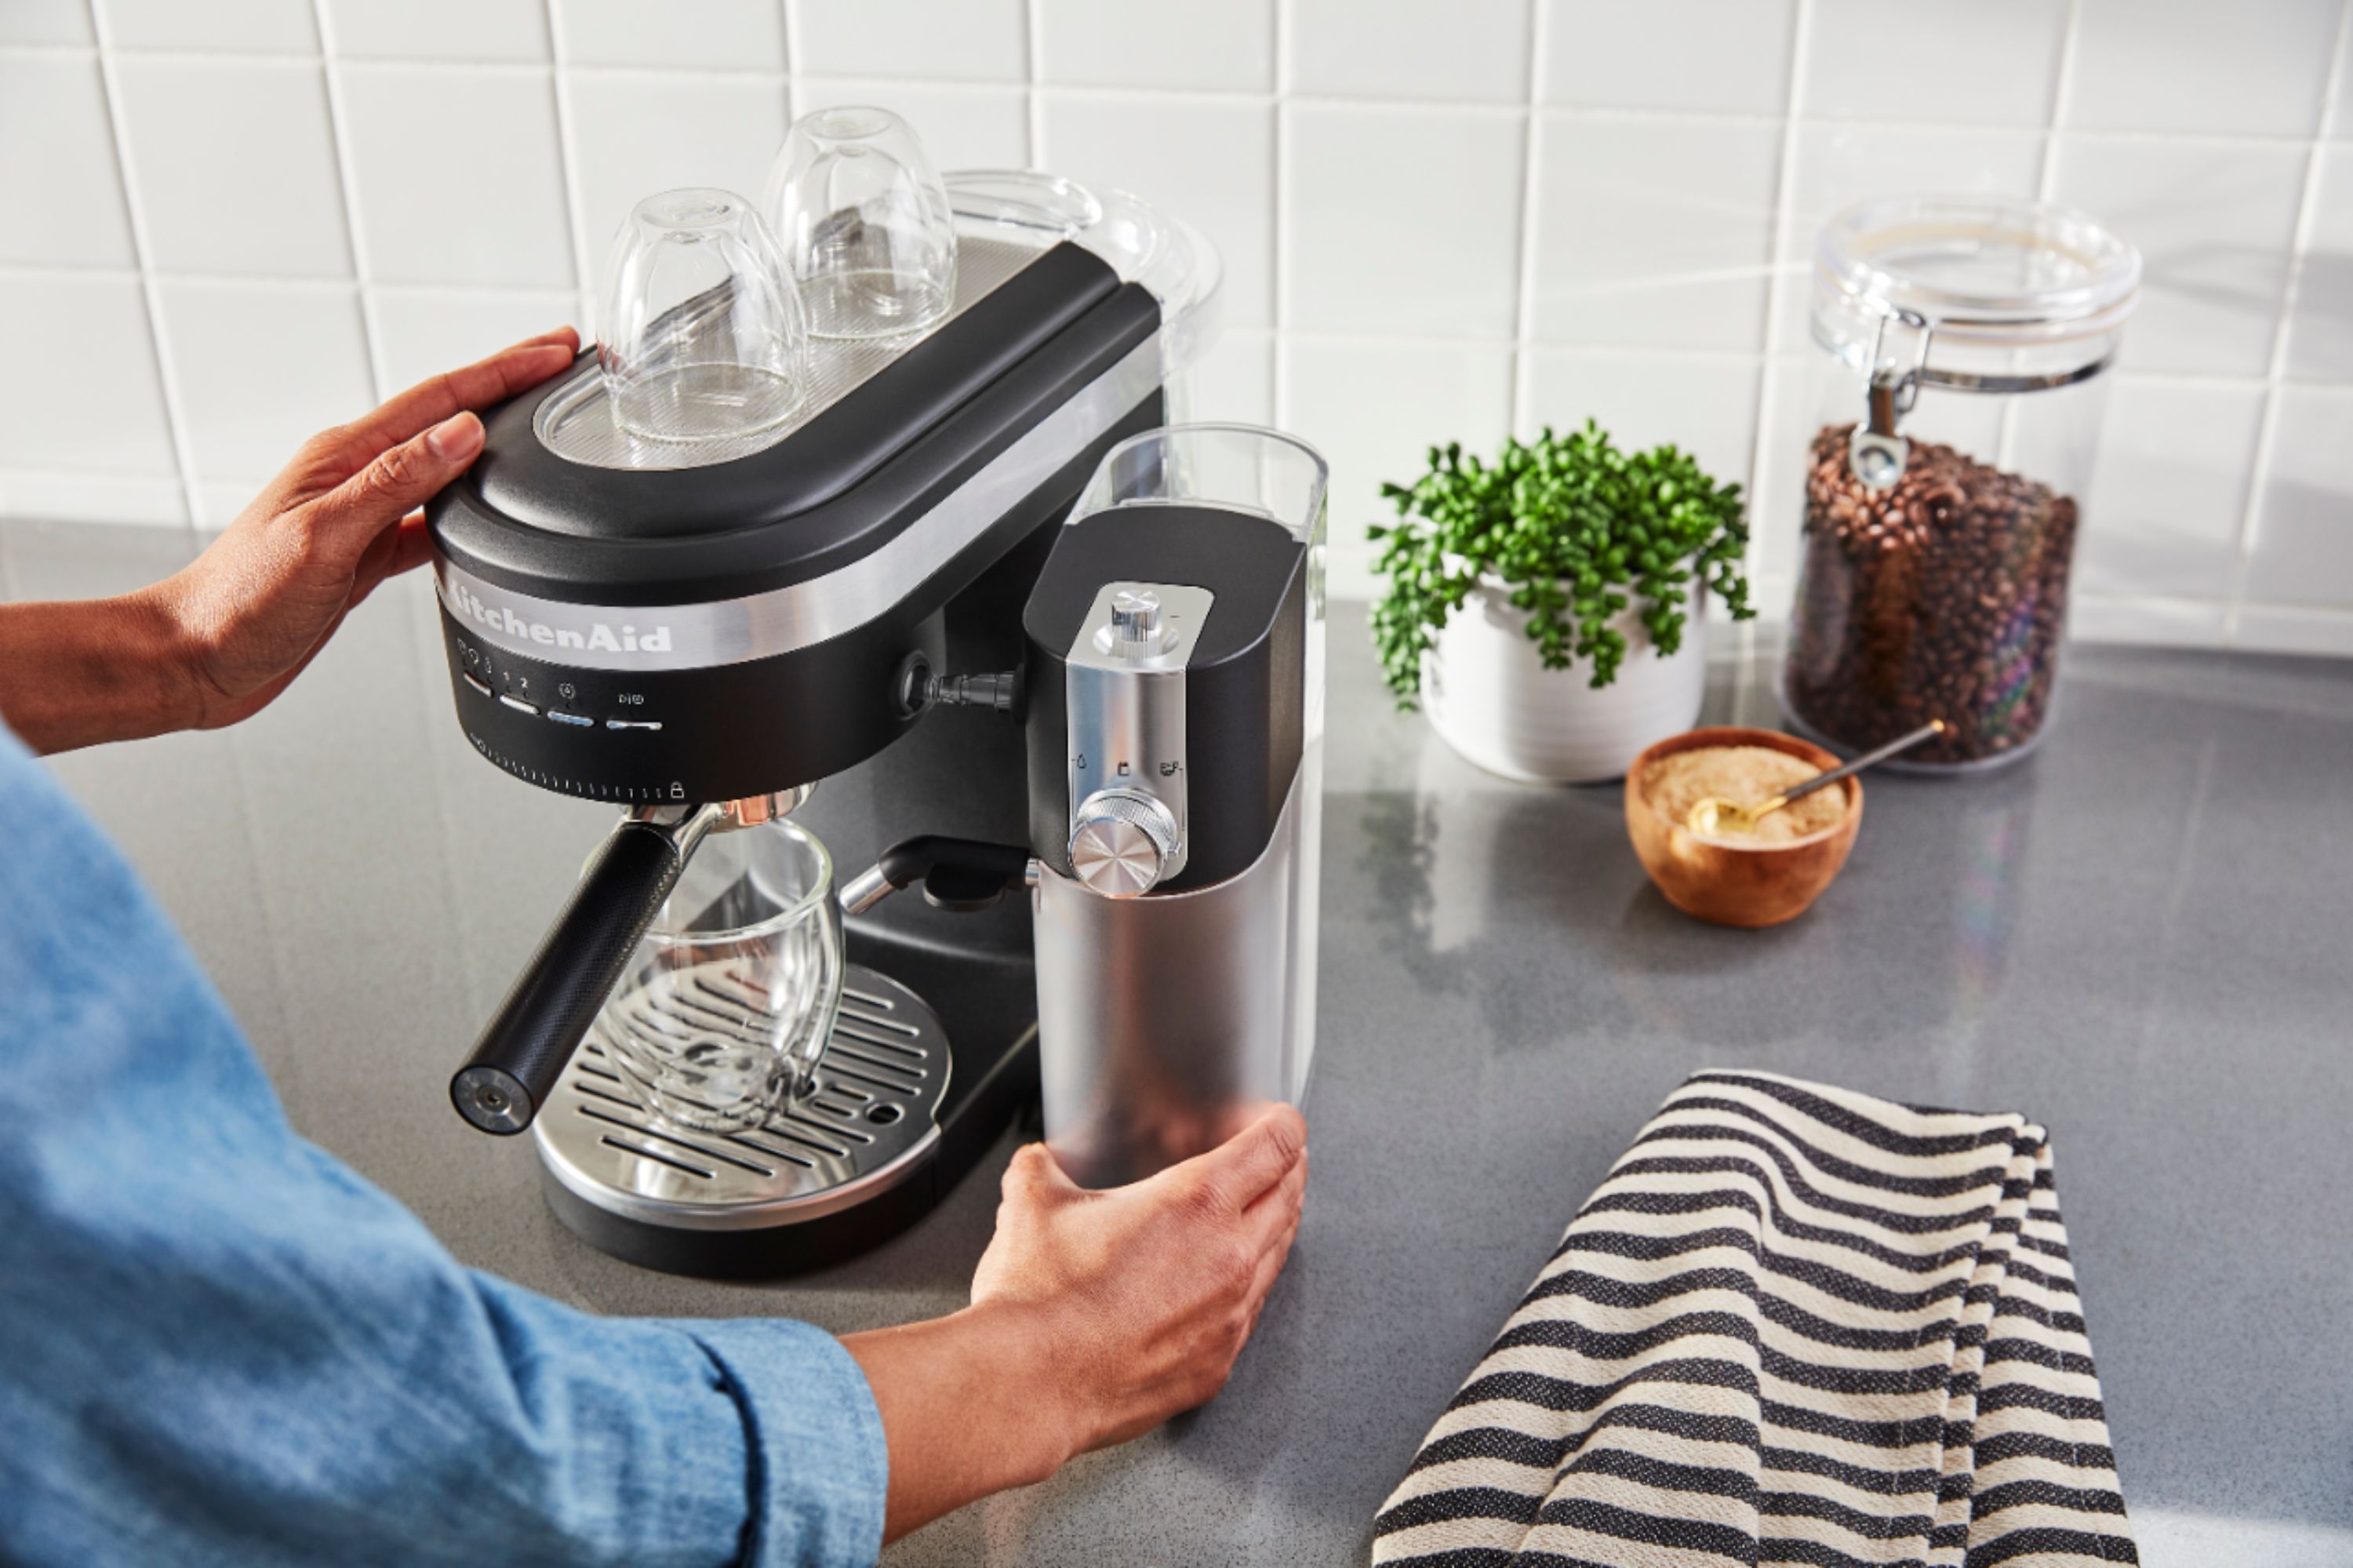 KitchenAid 14-Cup Coffeemaker Espresso KCM1402ES - Best Buy